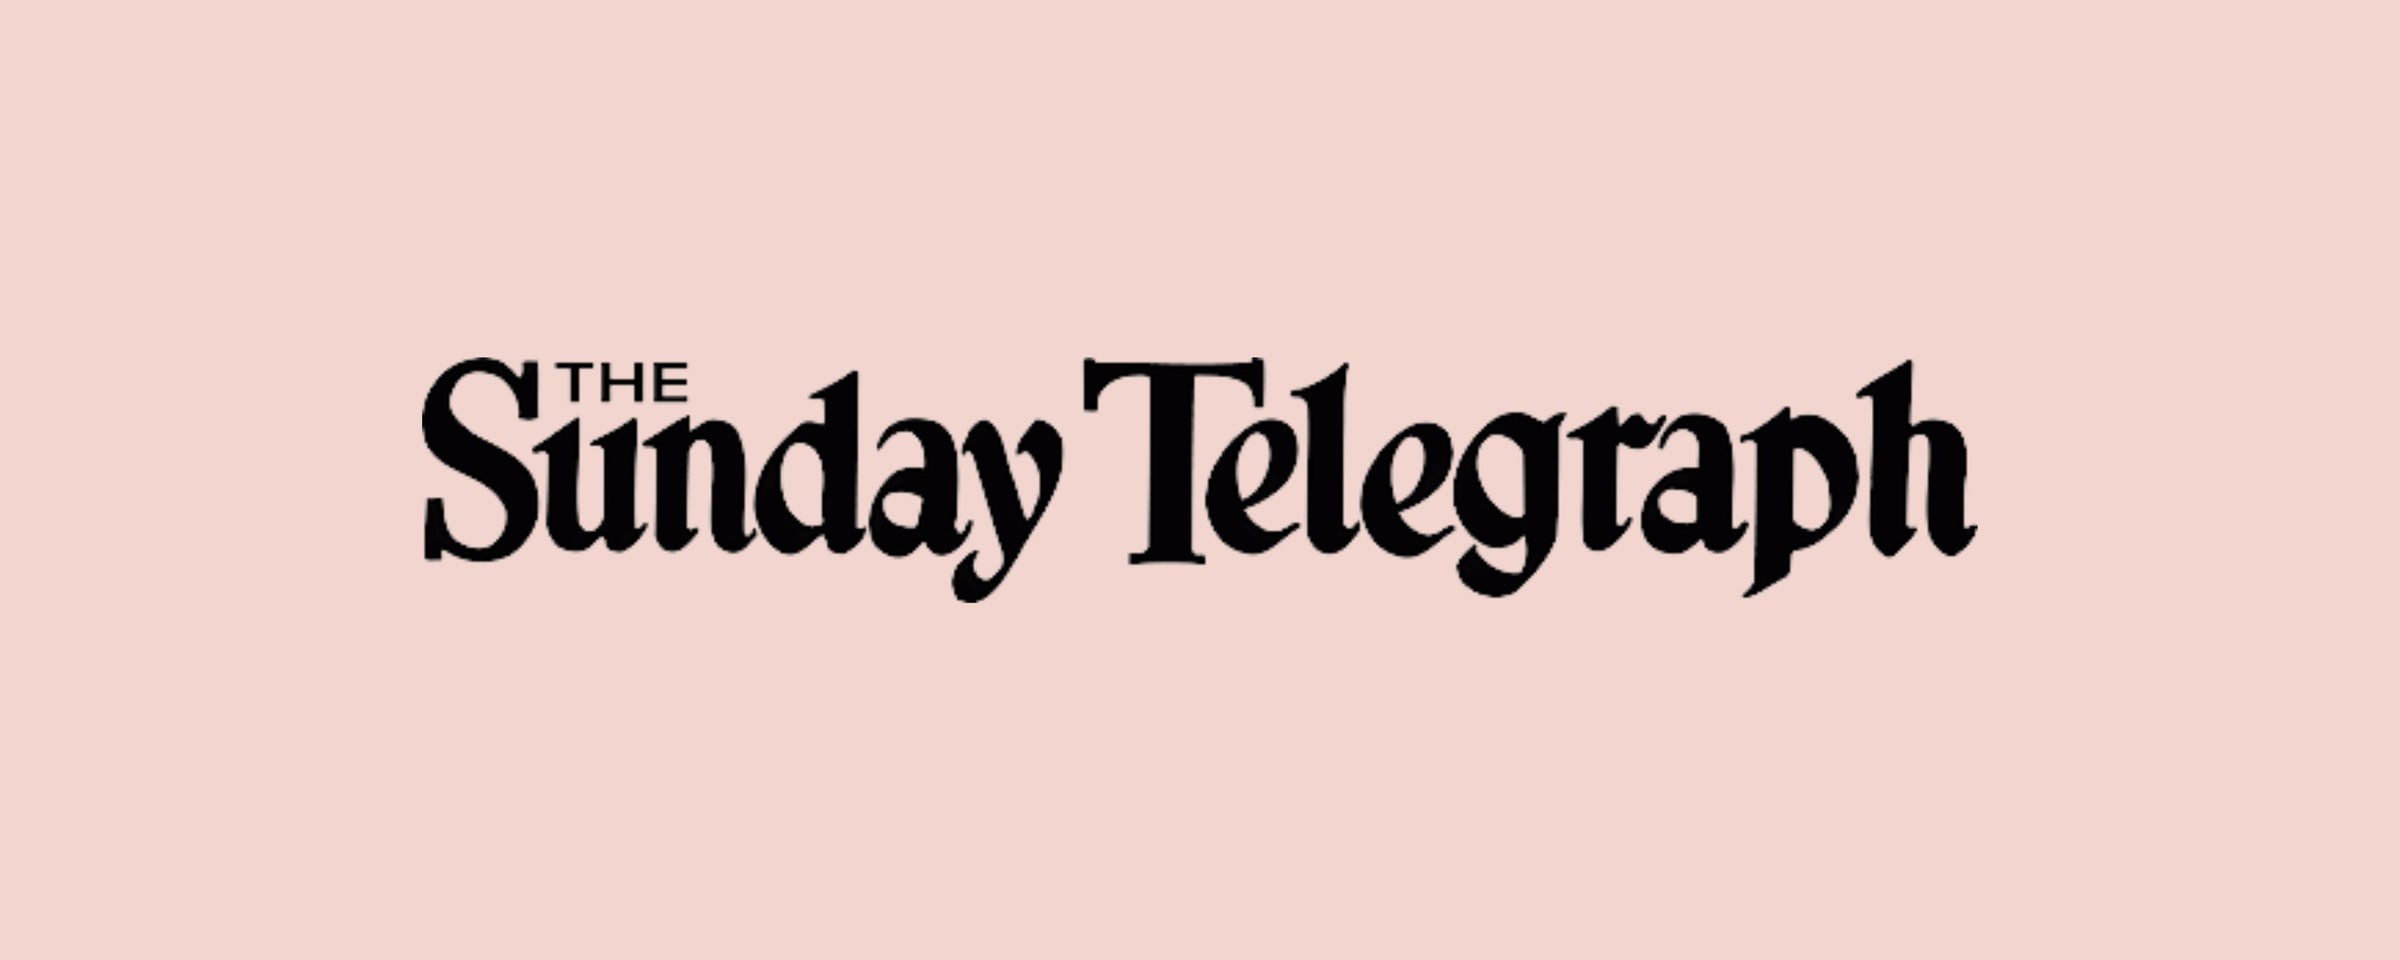 The Sunday Telegraph Features Lactamo for World Breastfeeding Week